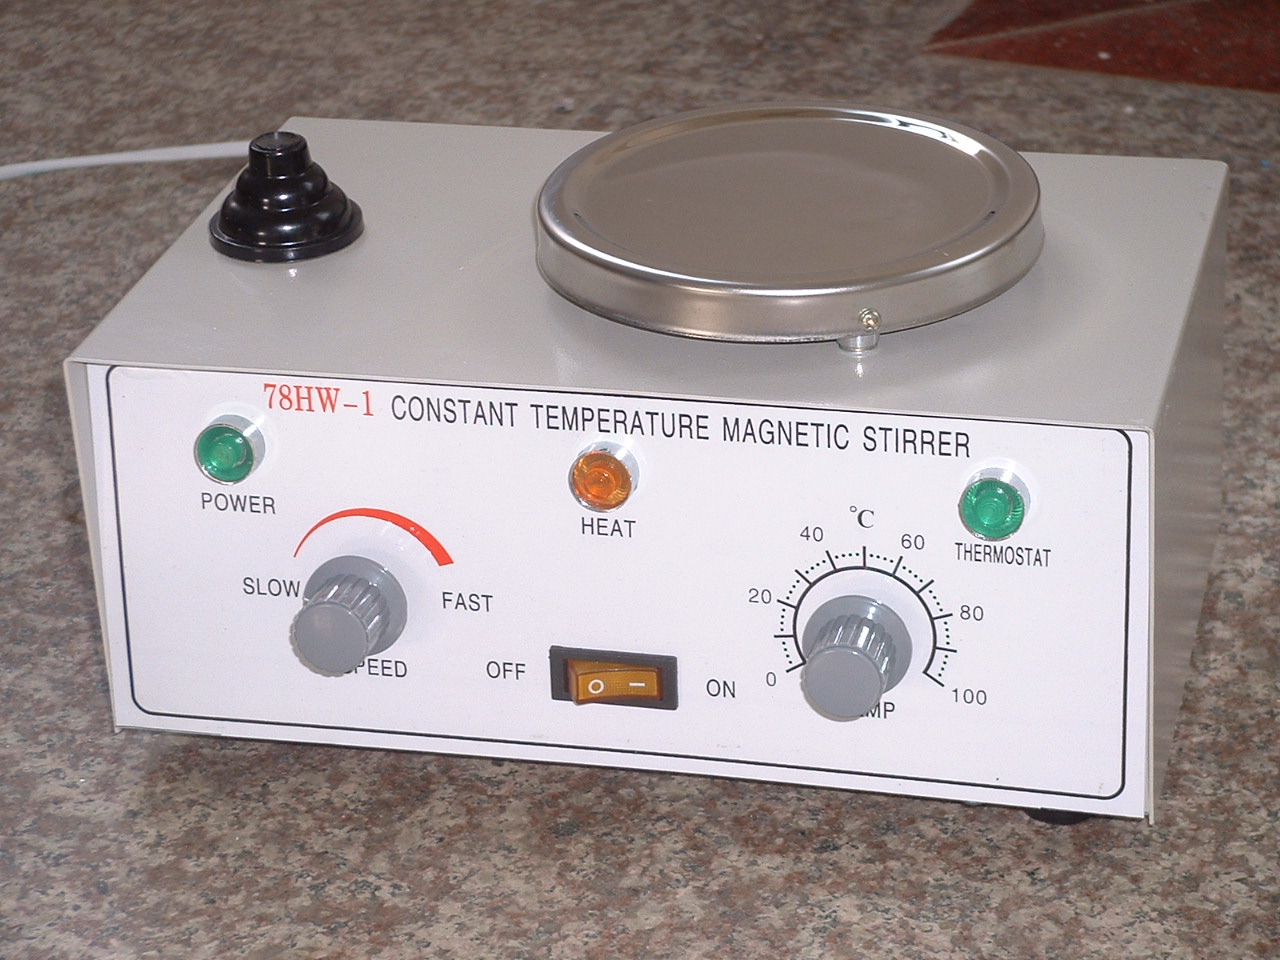 78HW-1 Magnetic Stirrer With Hotplate